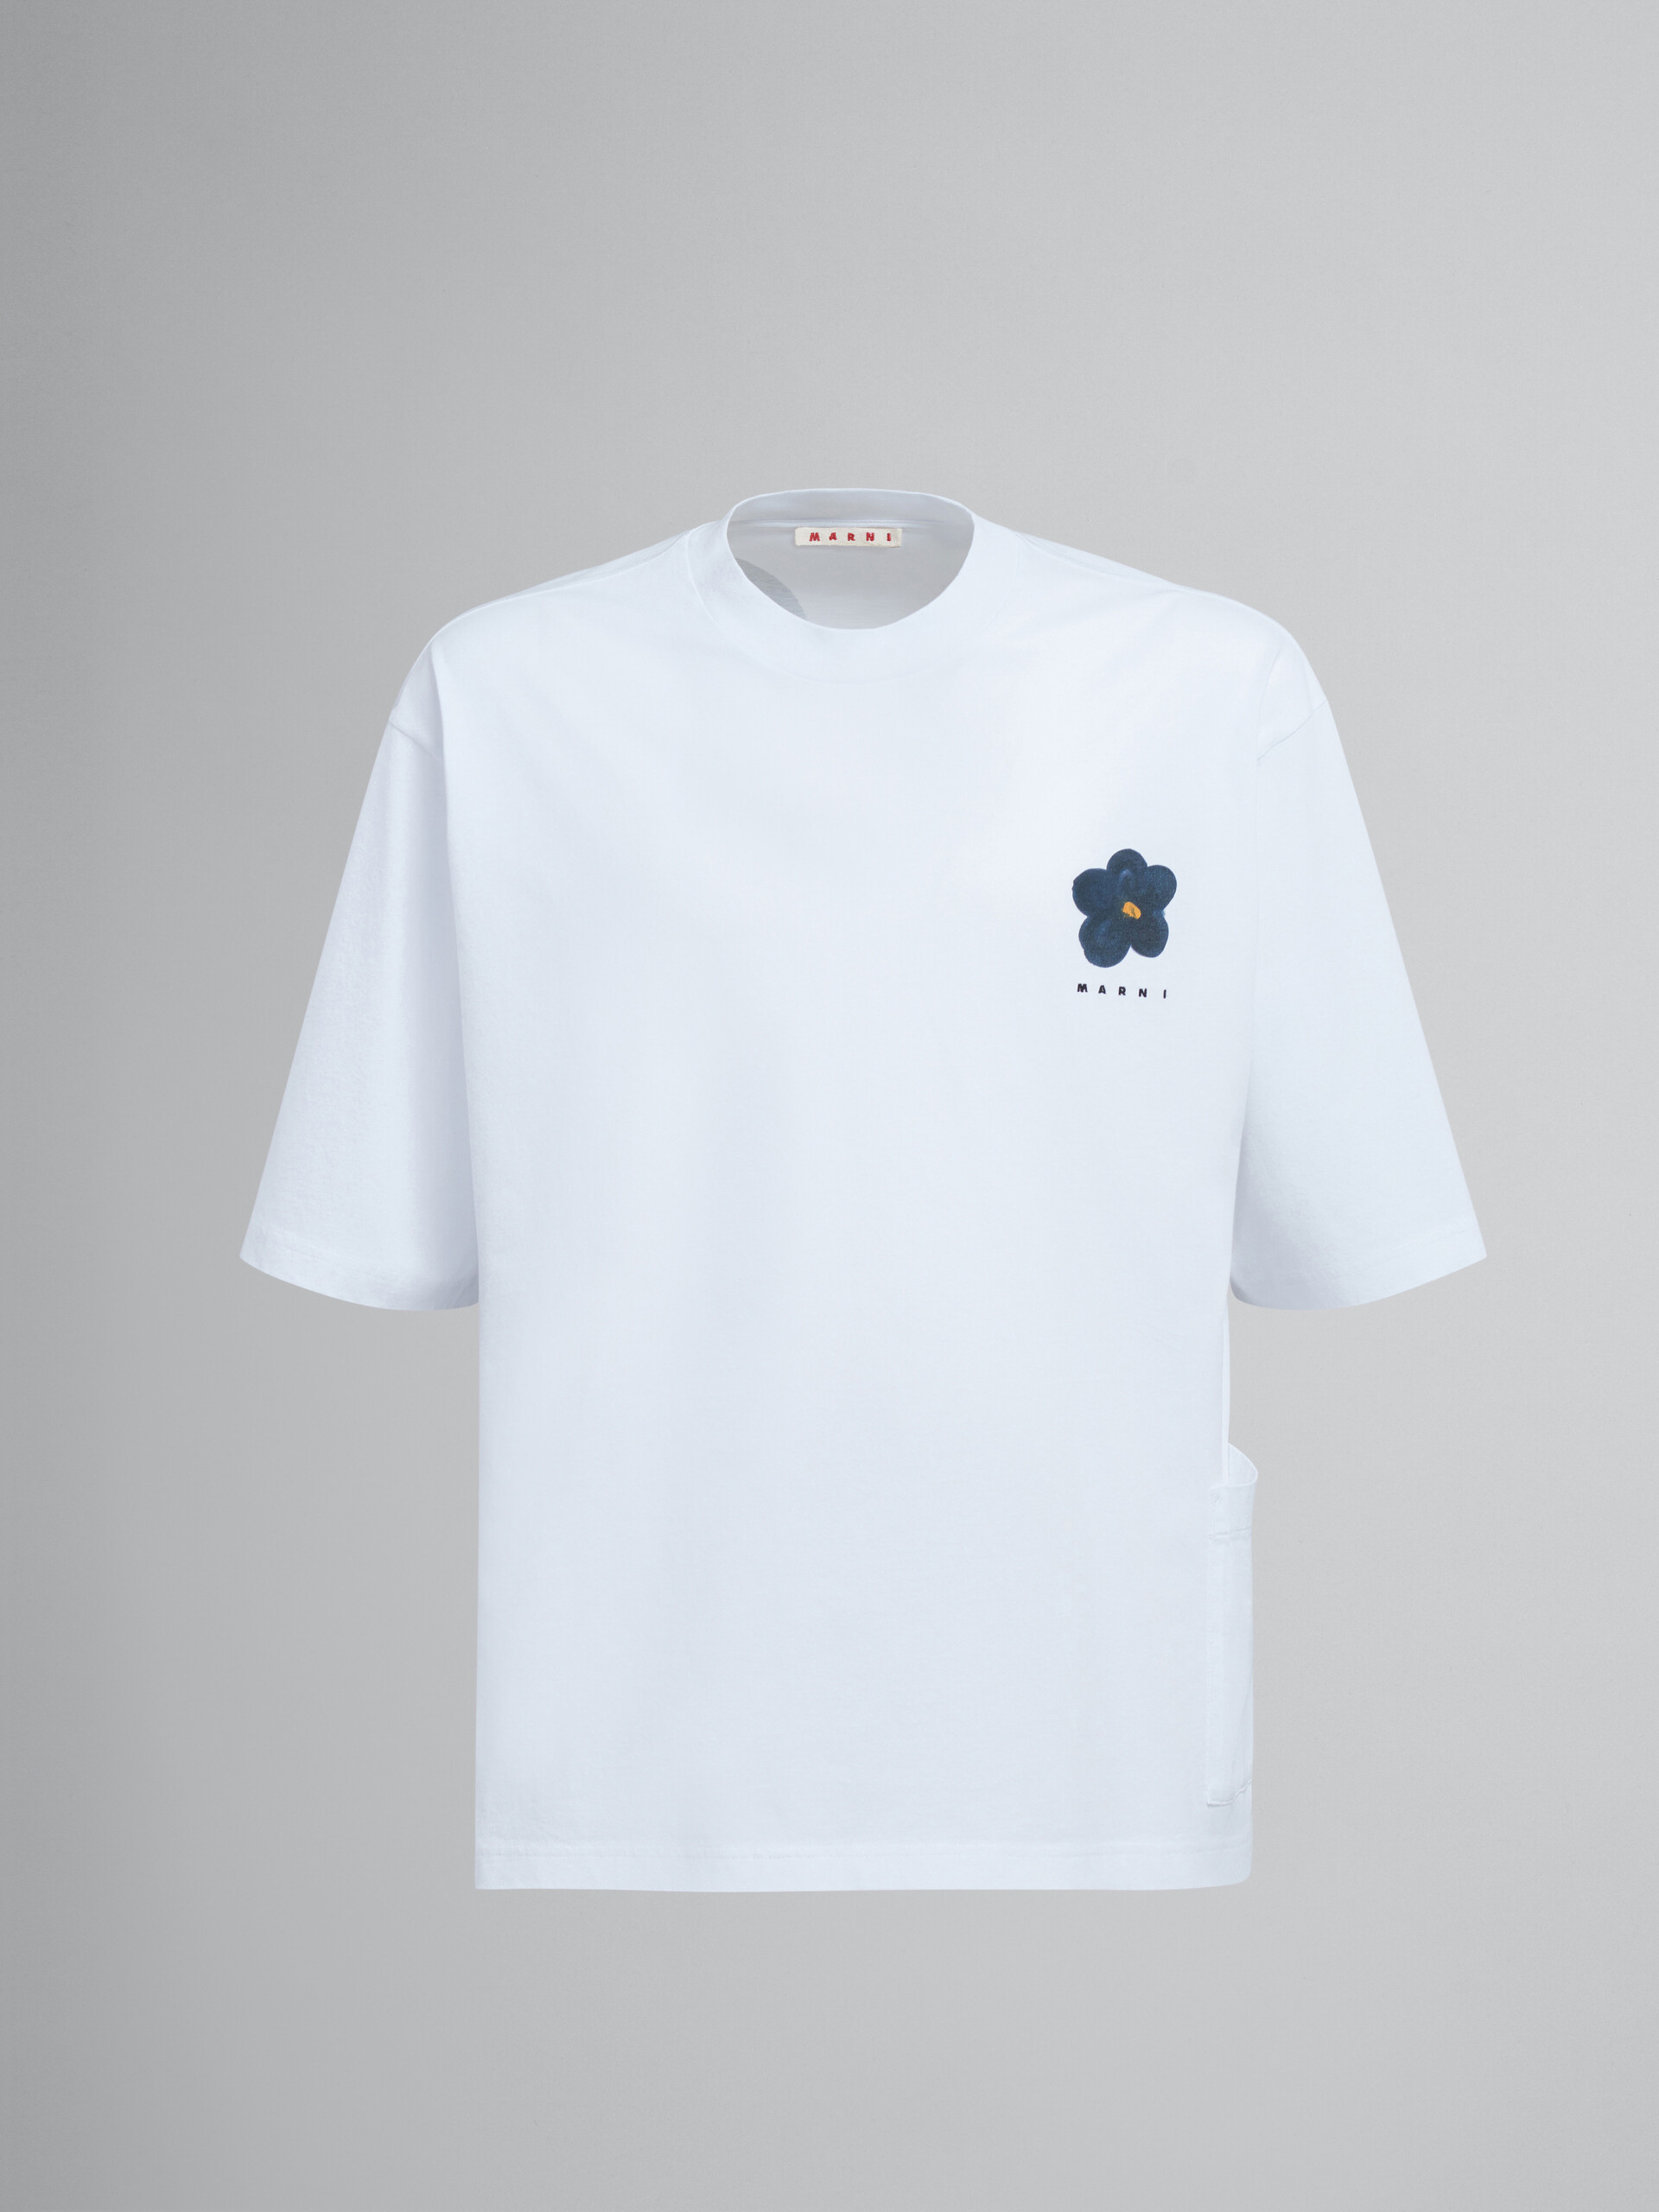 Black Daisy print white jersey crewneck T-shirt - T-shirts - Image 1